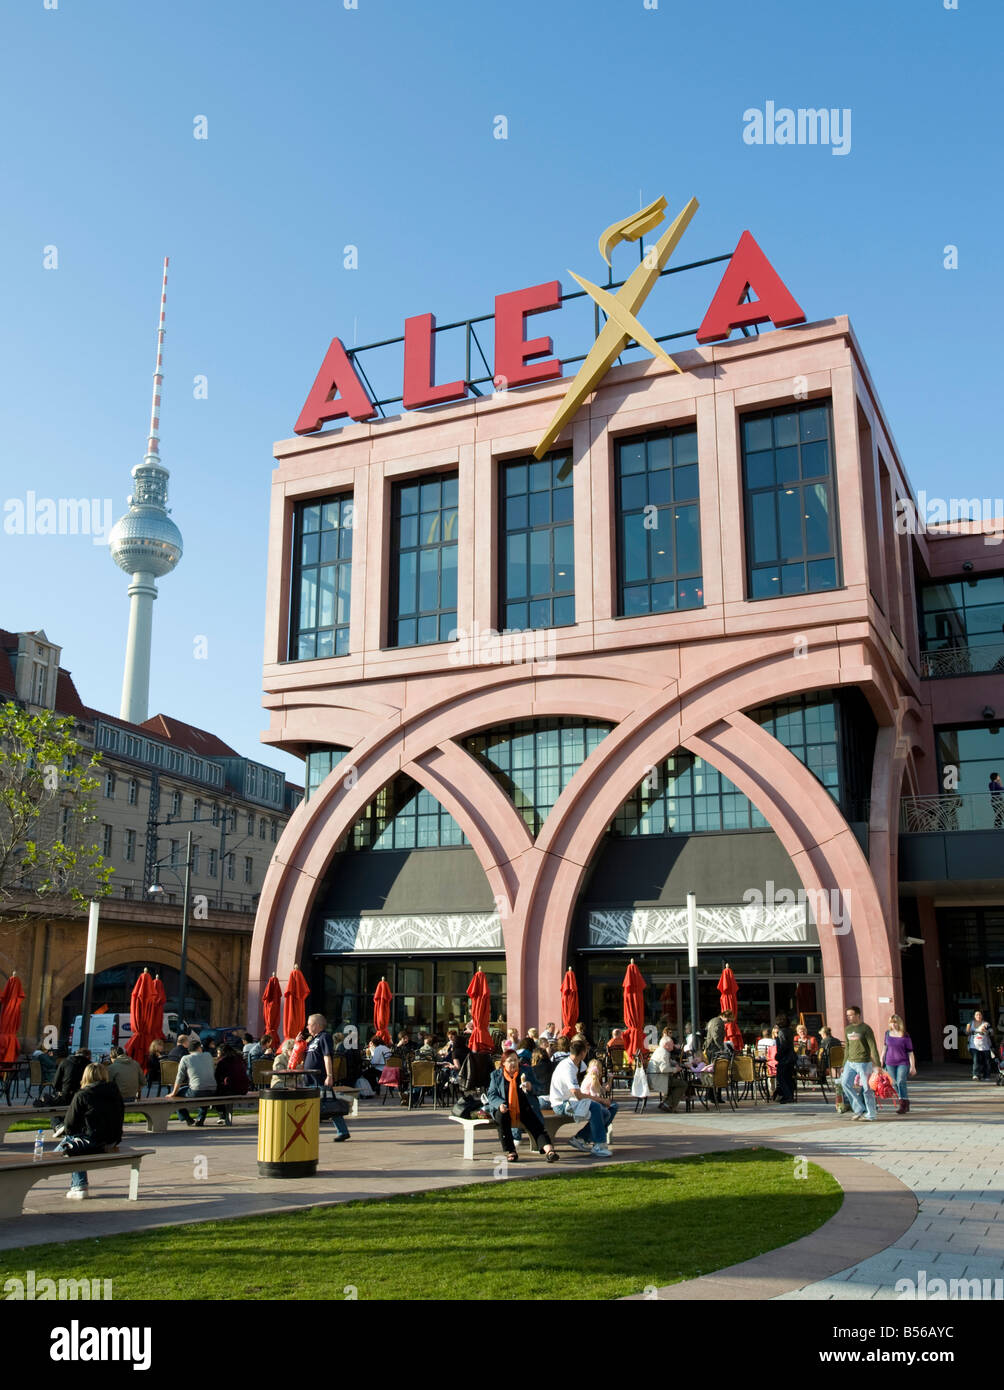 Exterior of new ALEXA shopping mall in Alexanderplatz in Berlin Germany Stock Photo